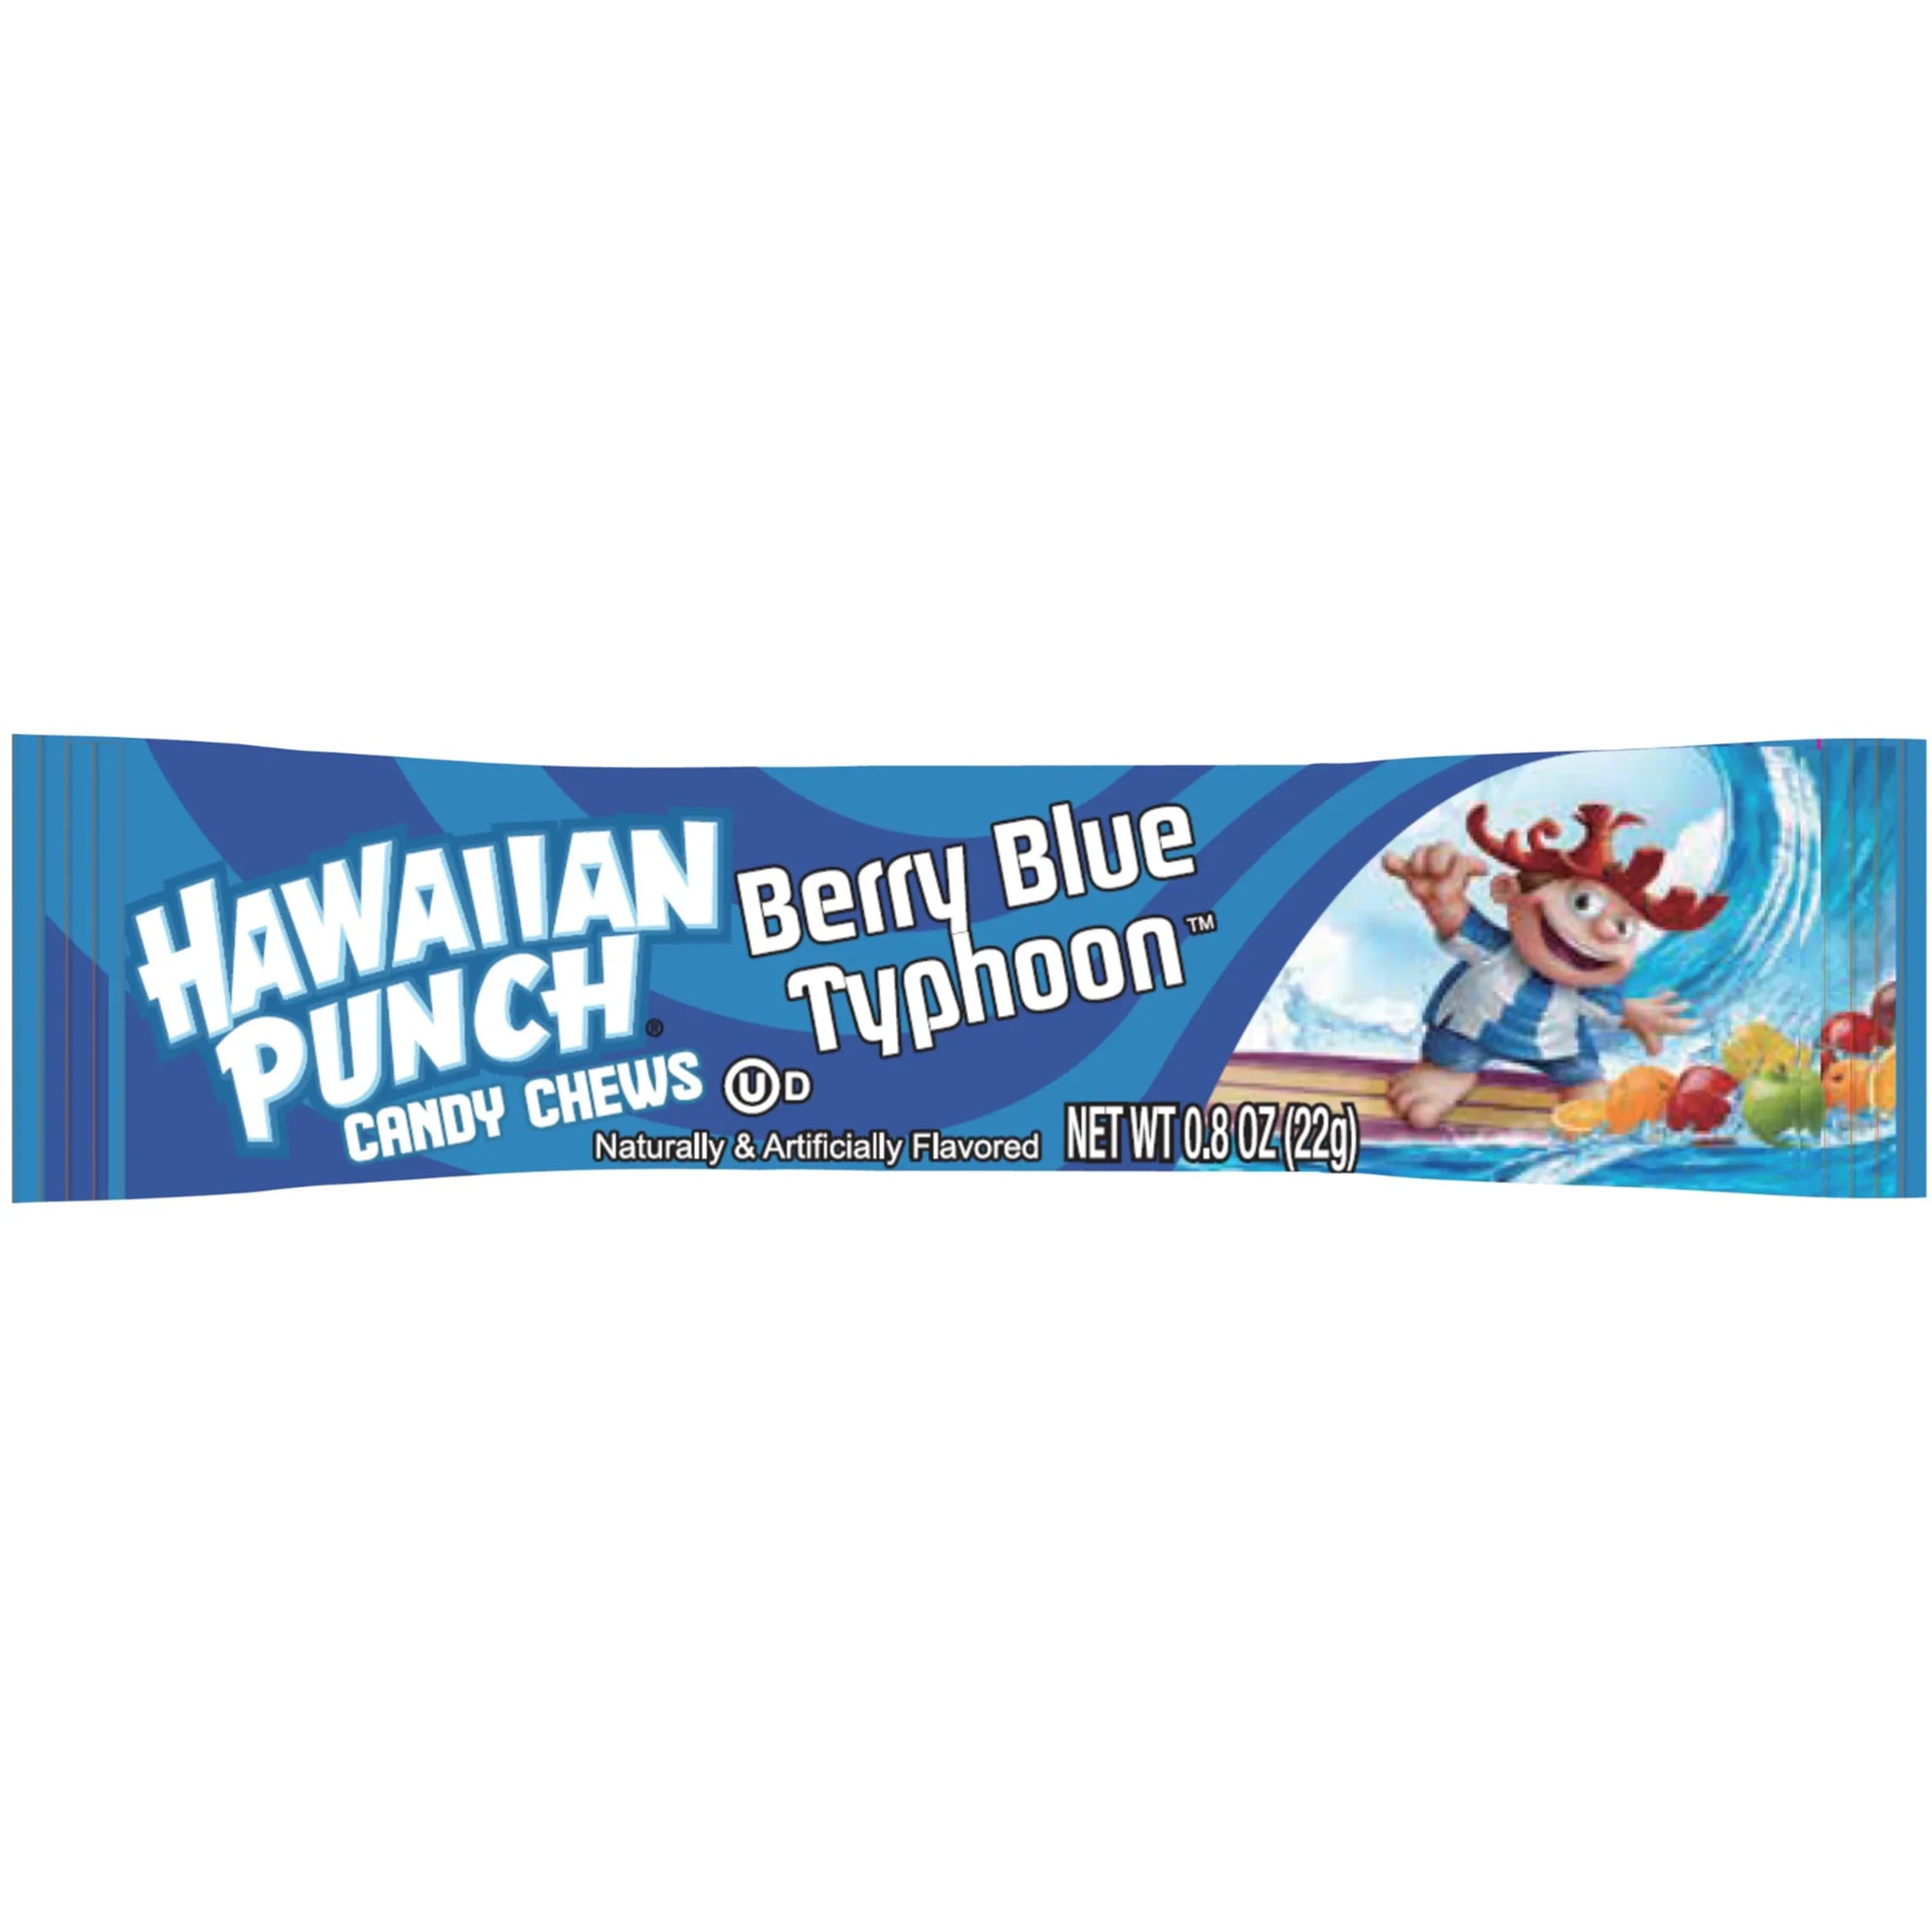 Hawaiian Punch Chew Berry Blue Typhoon